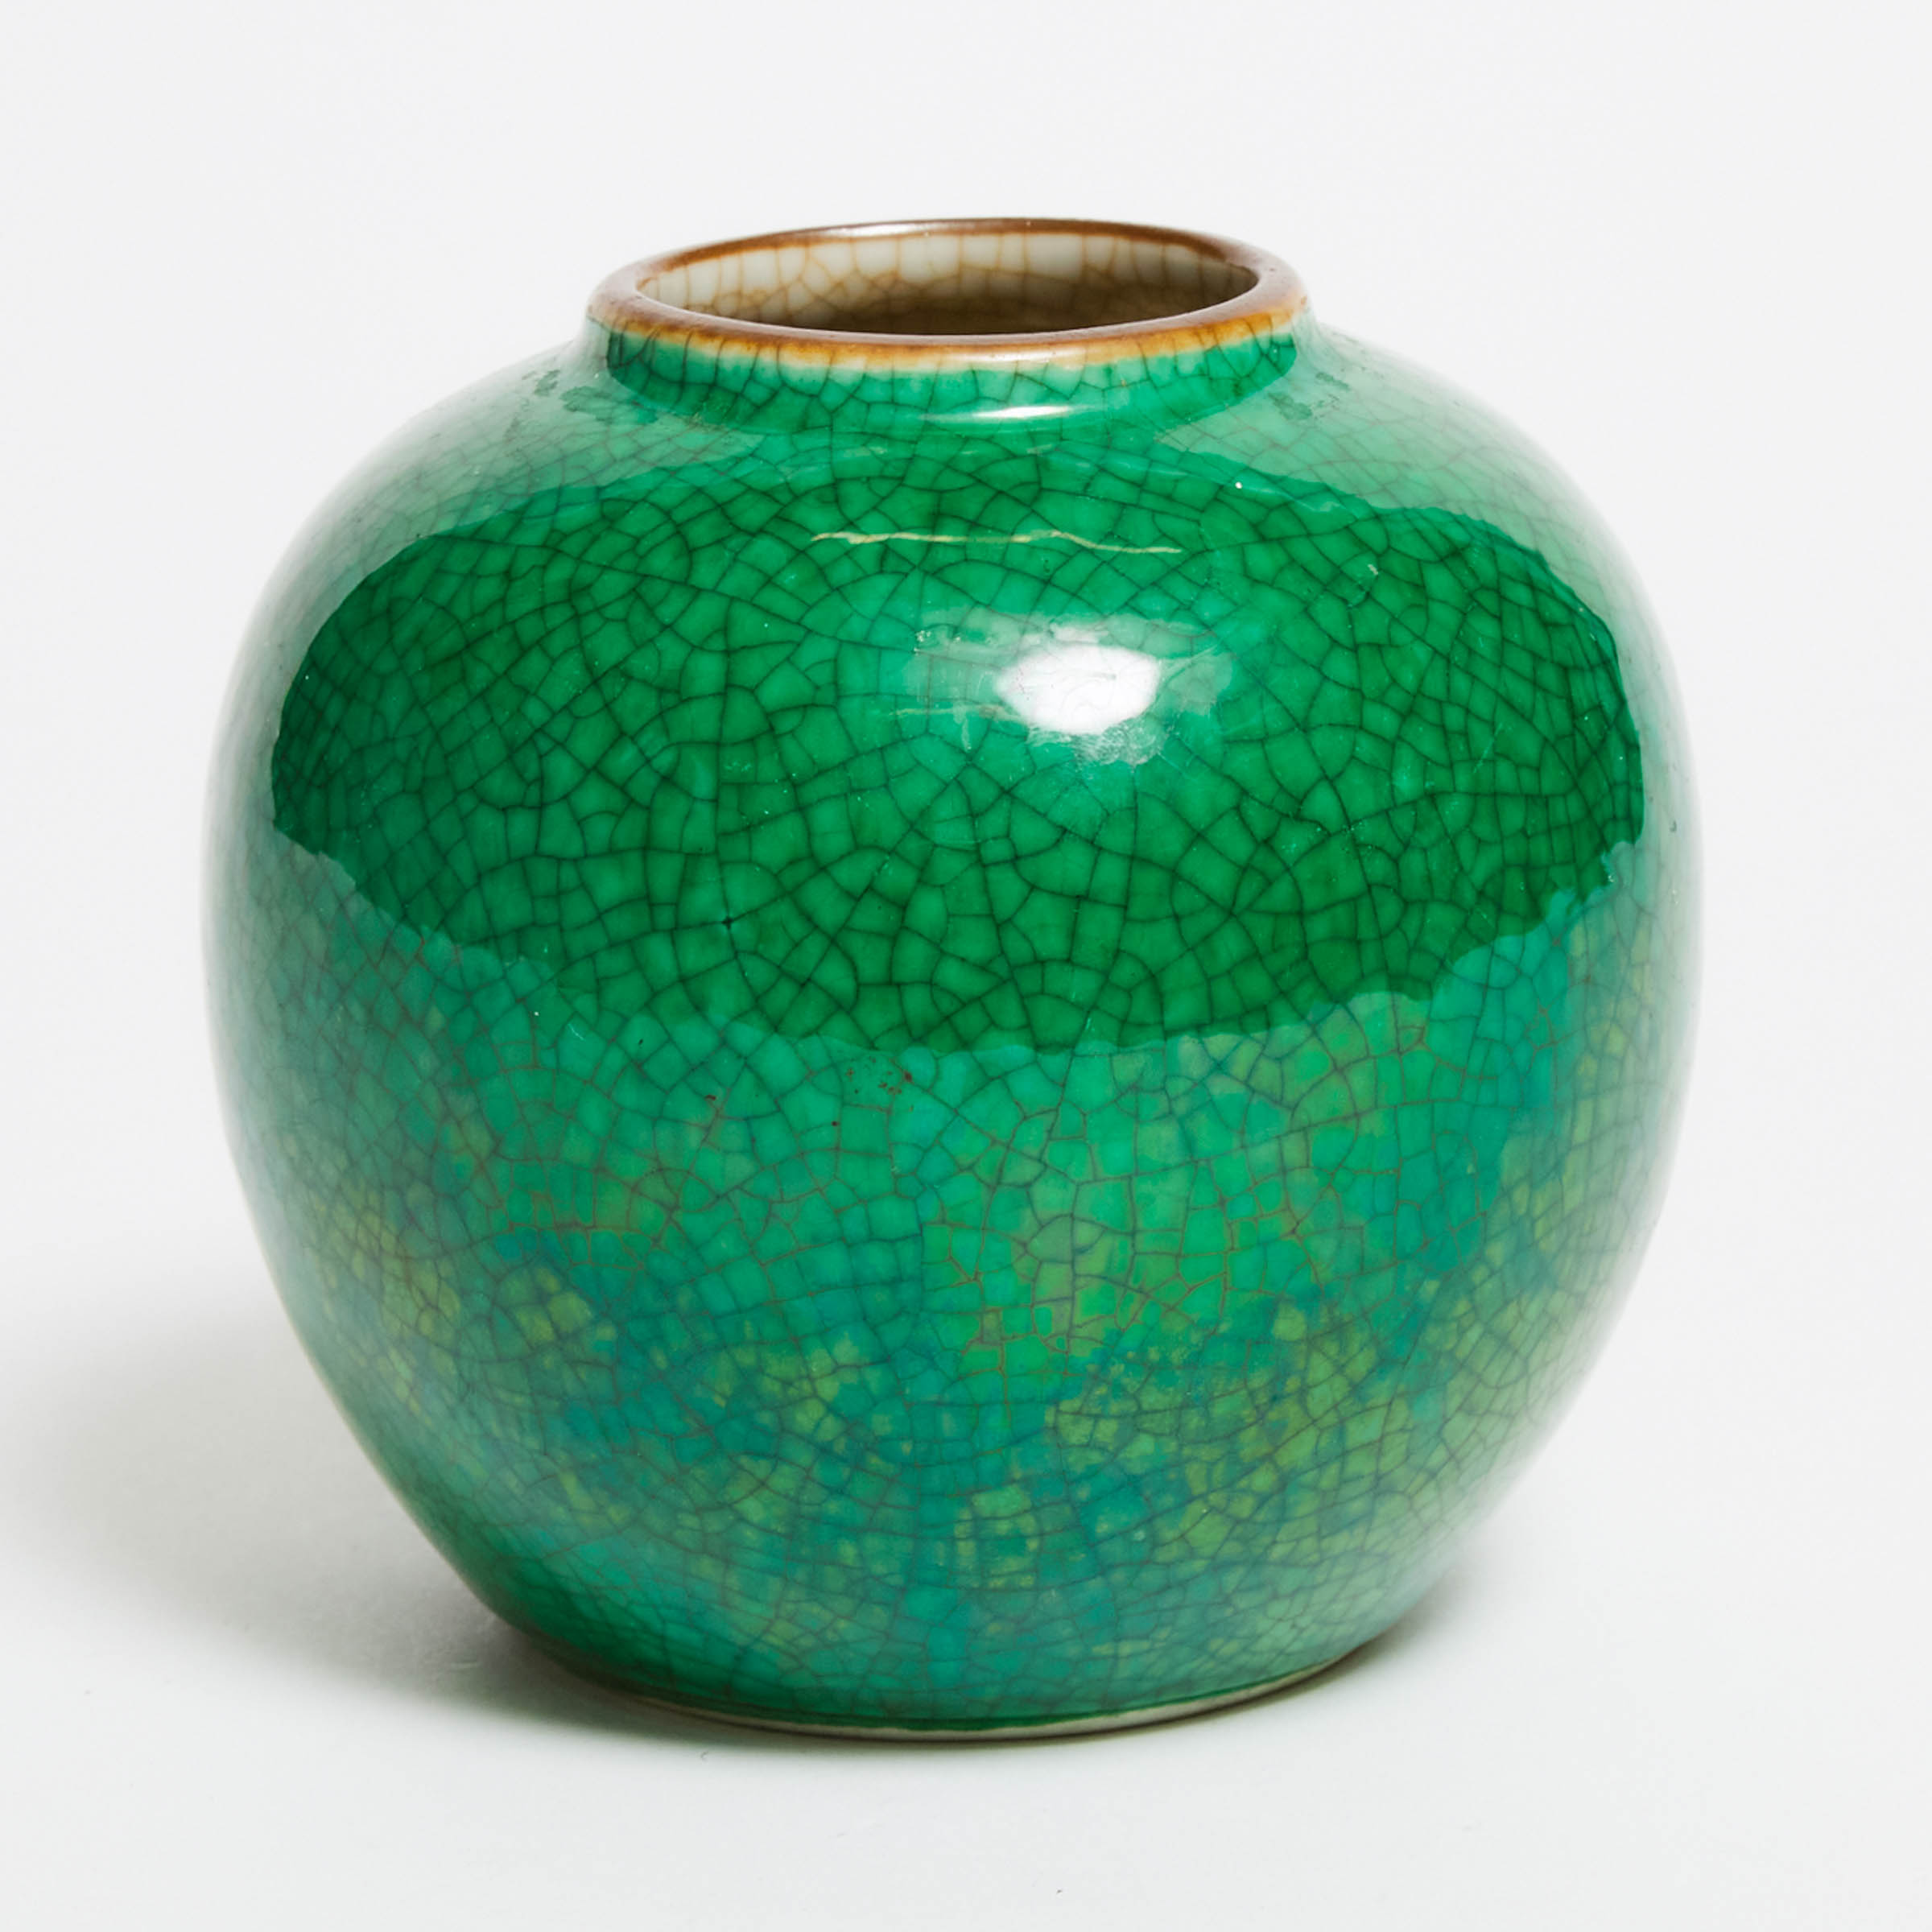 An Apple-Green Crackle-Glazed Jar, Late Qing Dynasty